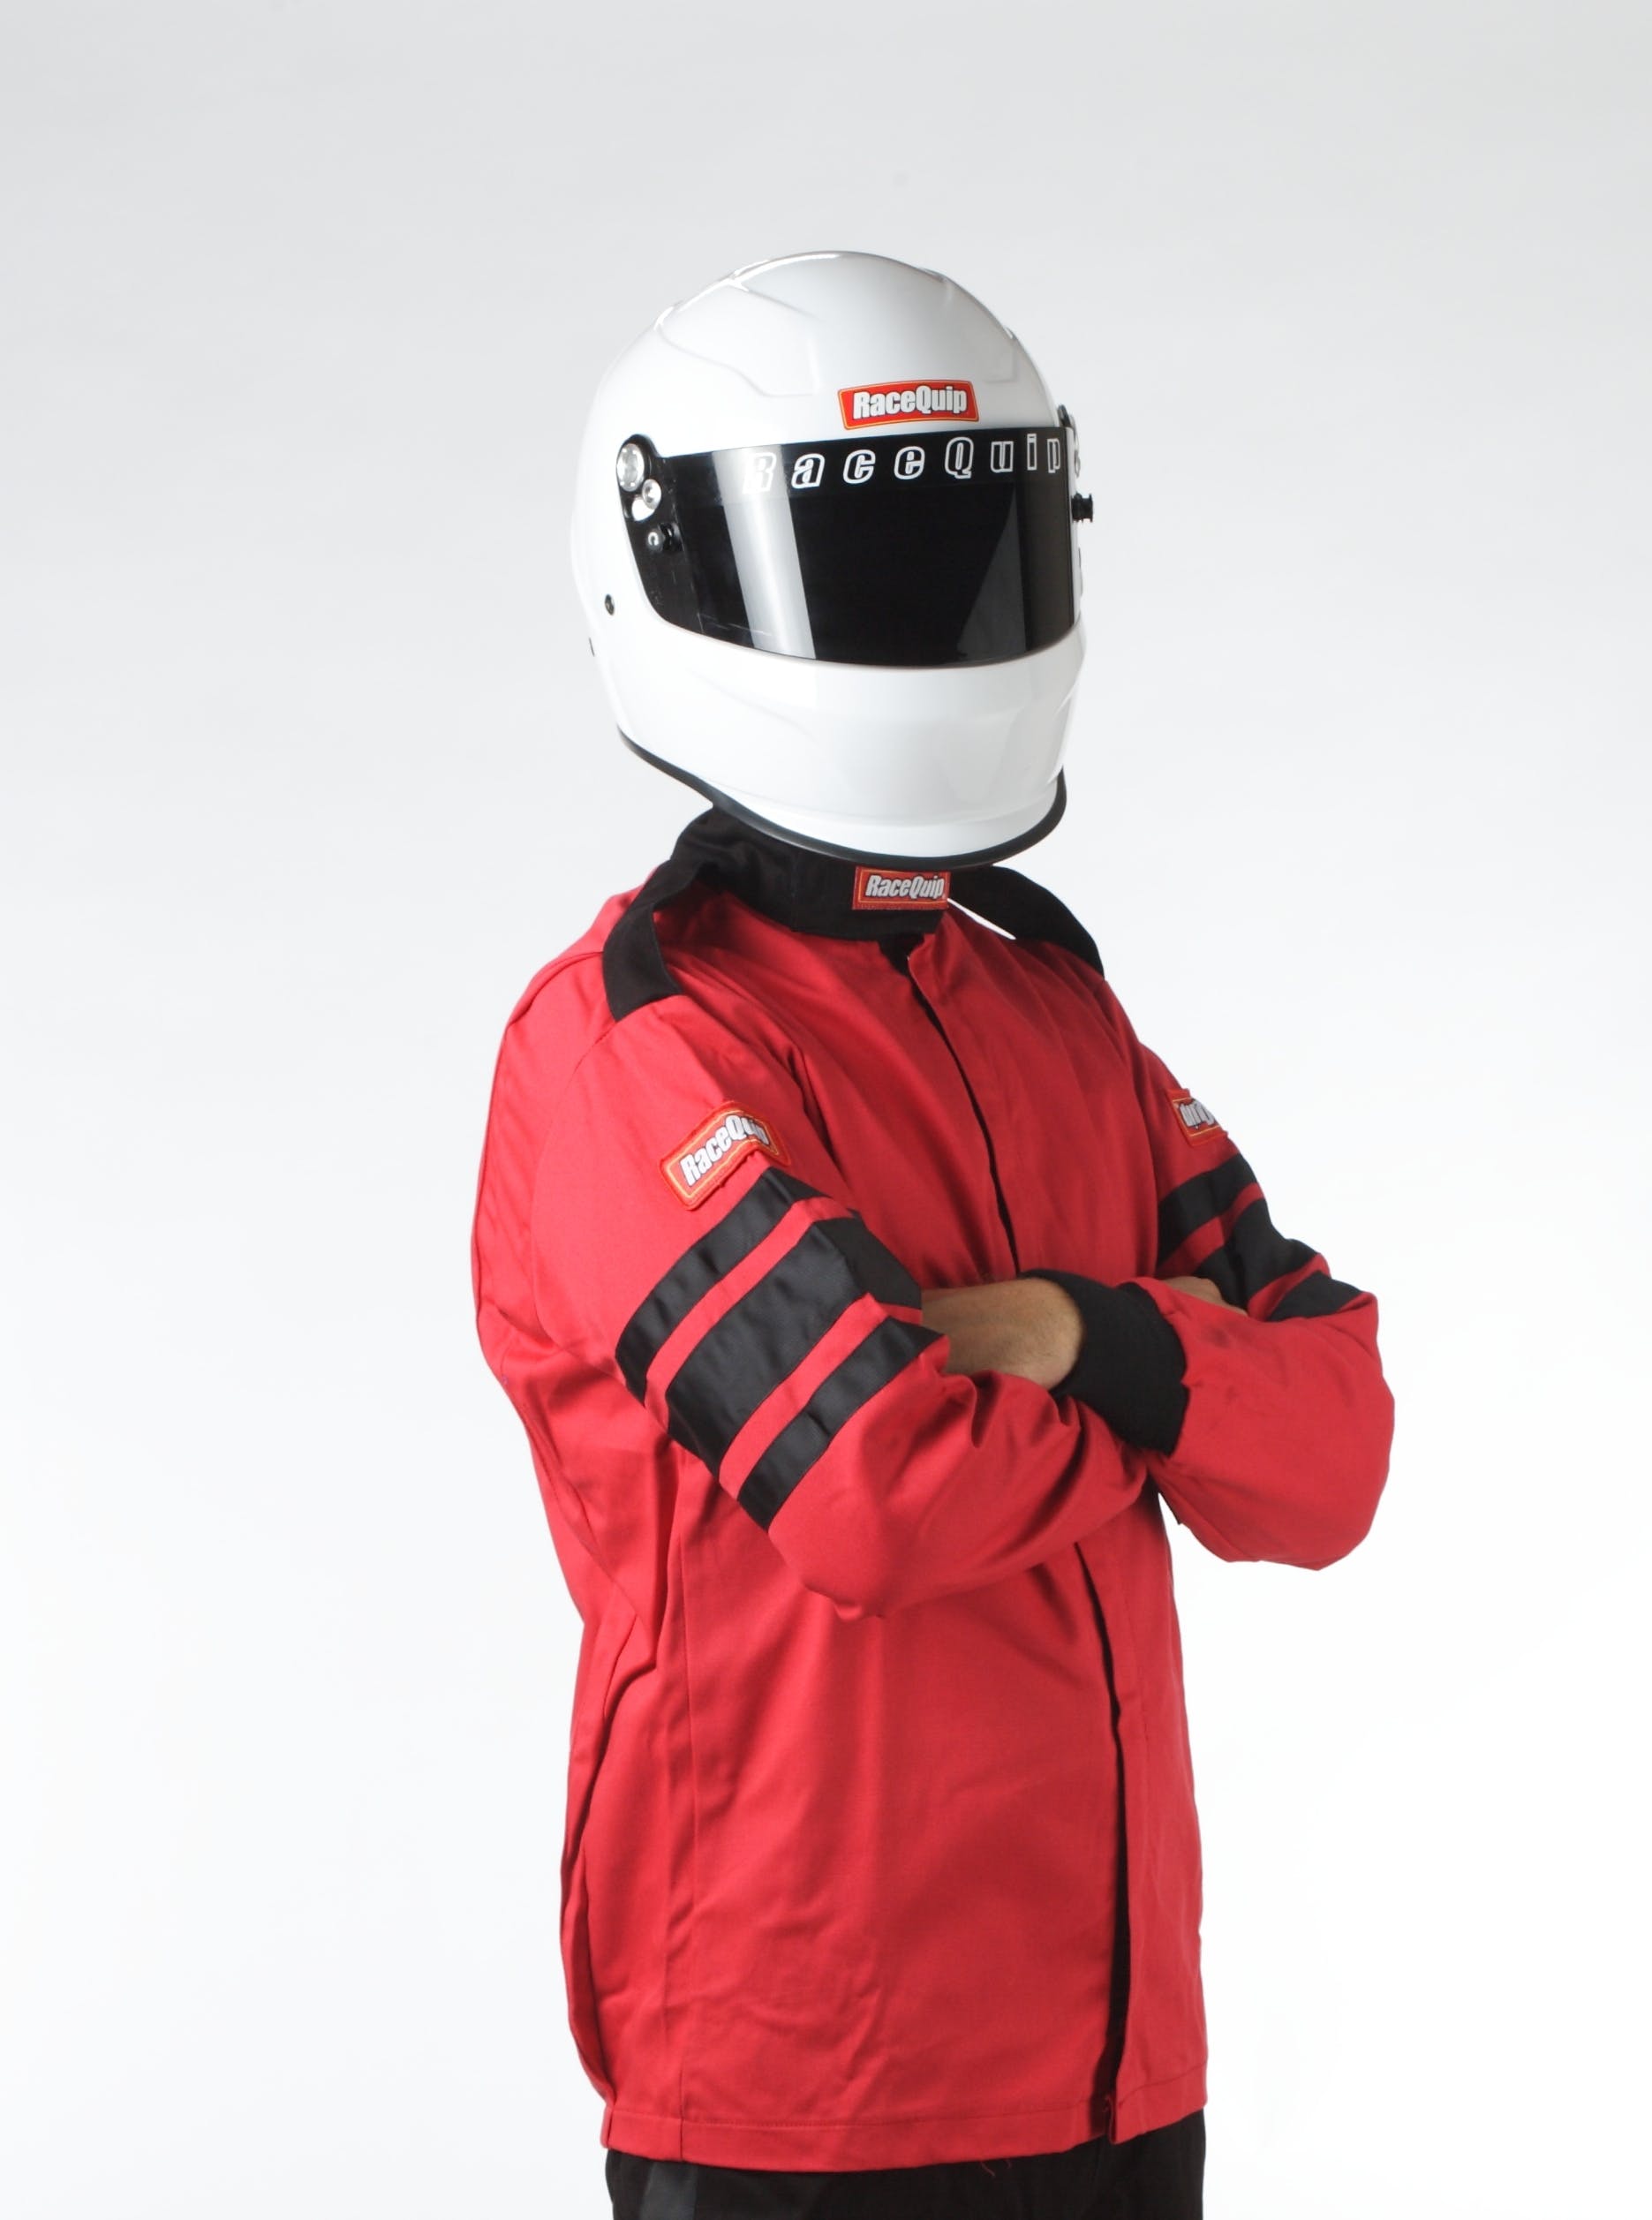 RaceQuip 111013 SFI-1 Pyrovatex Single-Layer Racing Fire Jacket (Red, Medium)